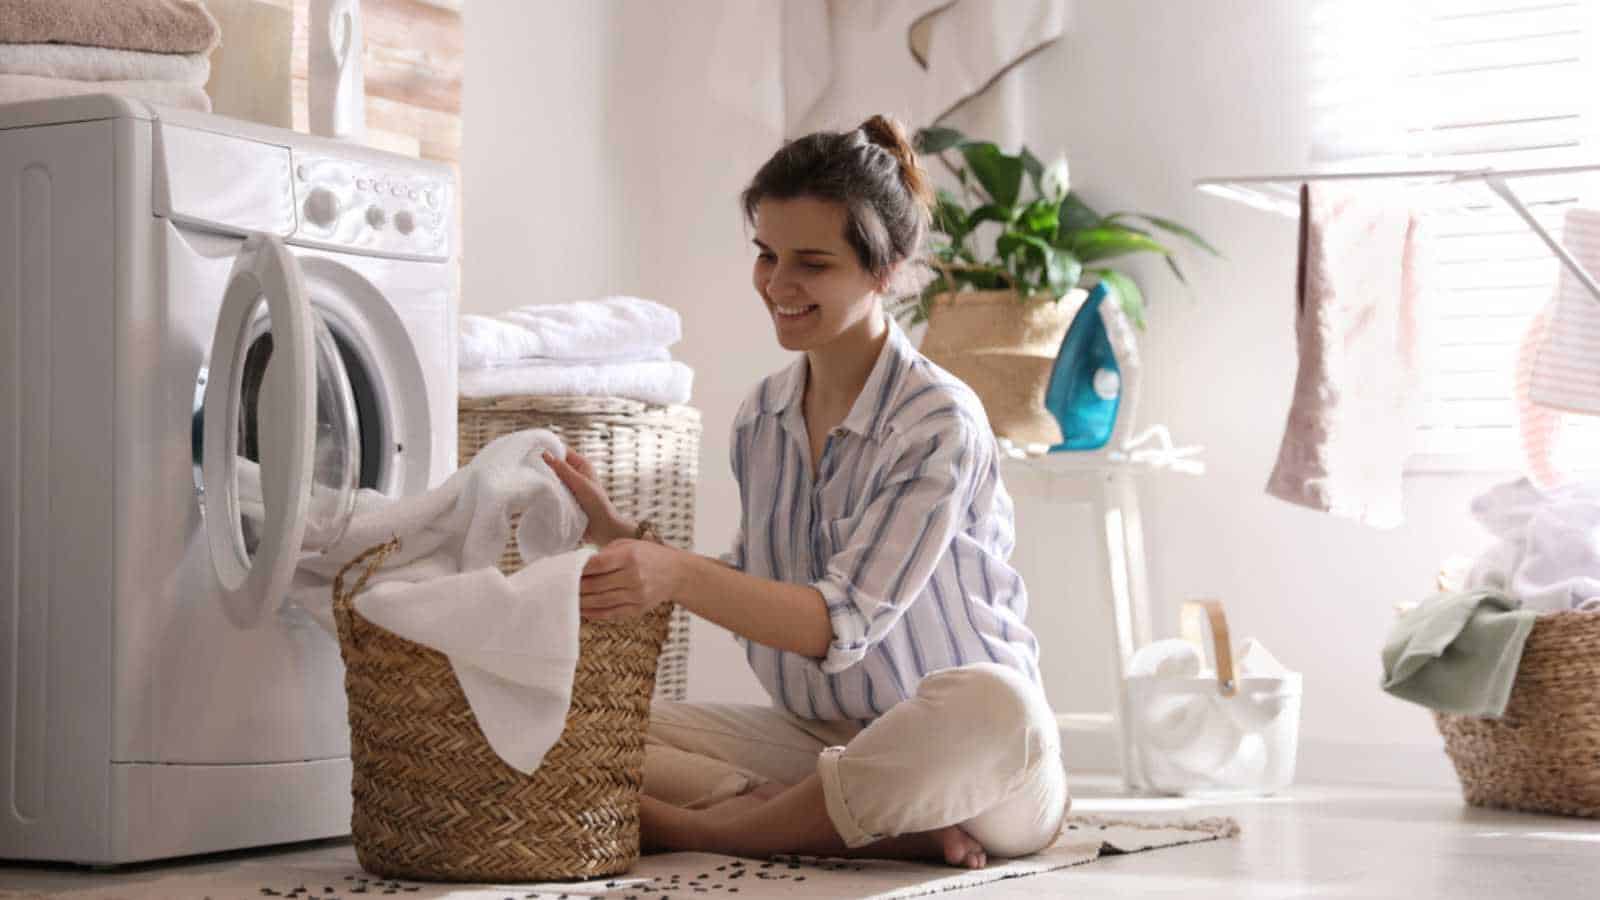 Woman doing laundry